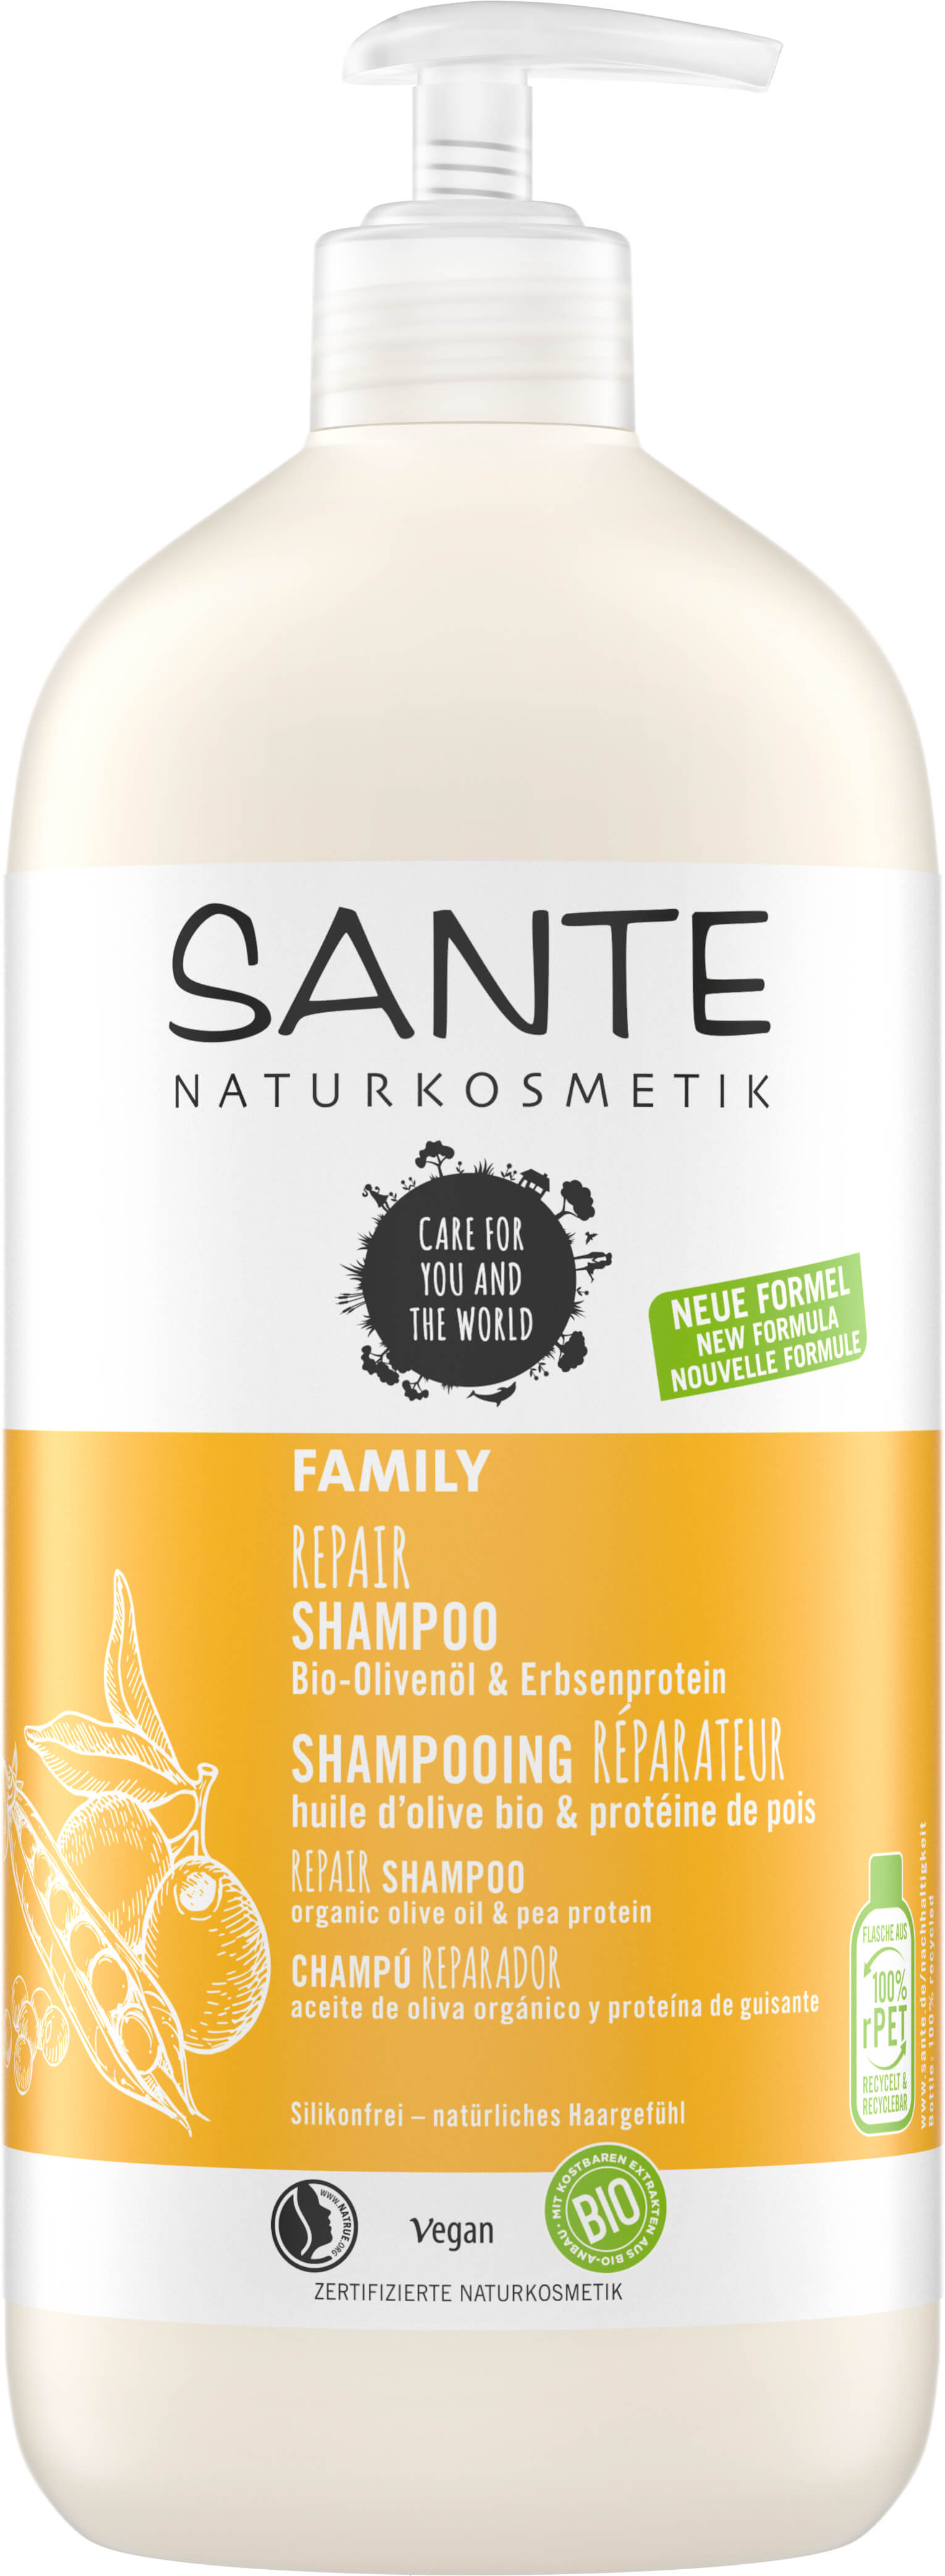 | & Shampoo Bio-Olivenöl Erbsenprotein Repair Naturkosmetik SANTE